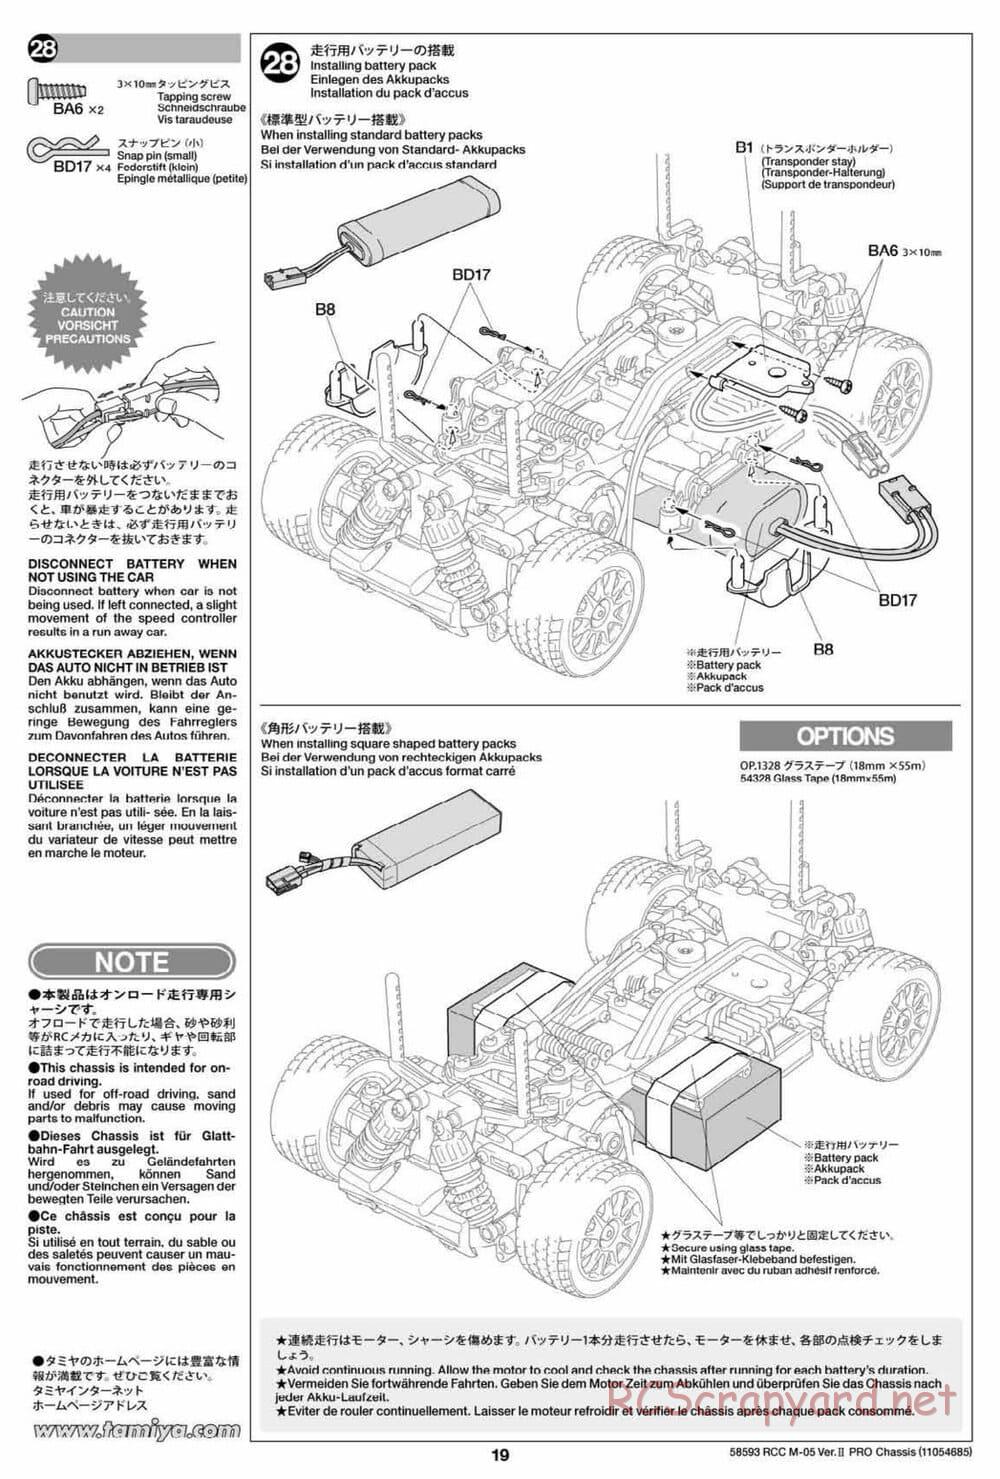 Tamiya - M-05 Ver.II Pro Chassis - Manual - Page 19